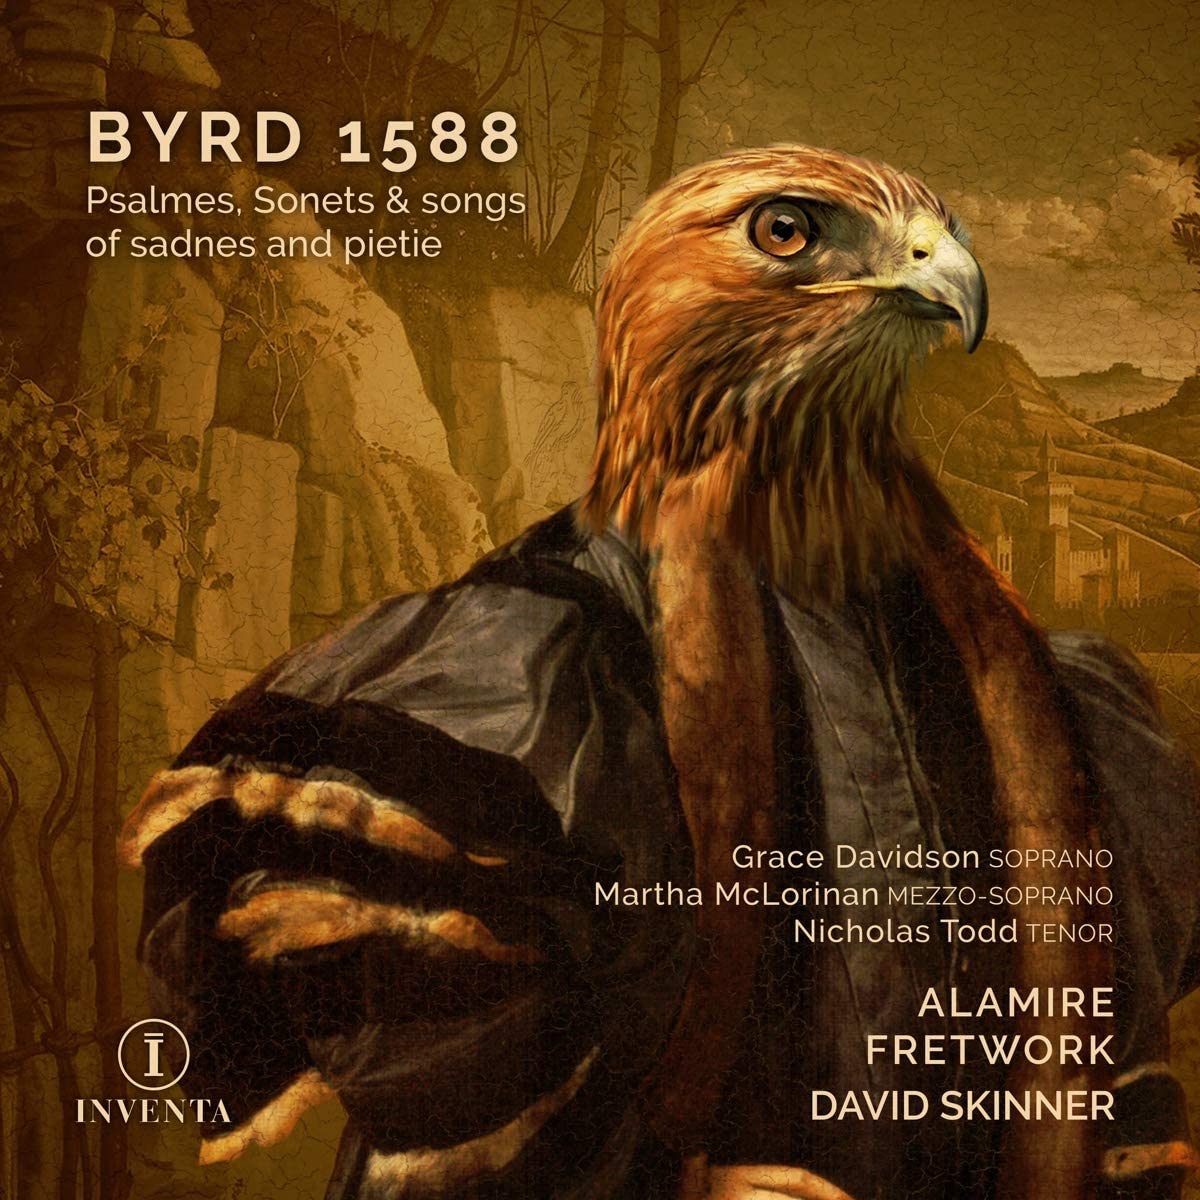 CD cover Byrd 1588 Alamire Fretwork David Skinner